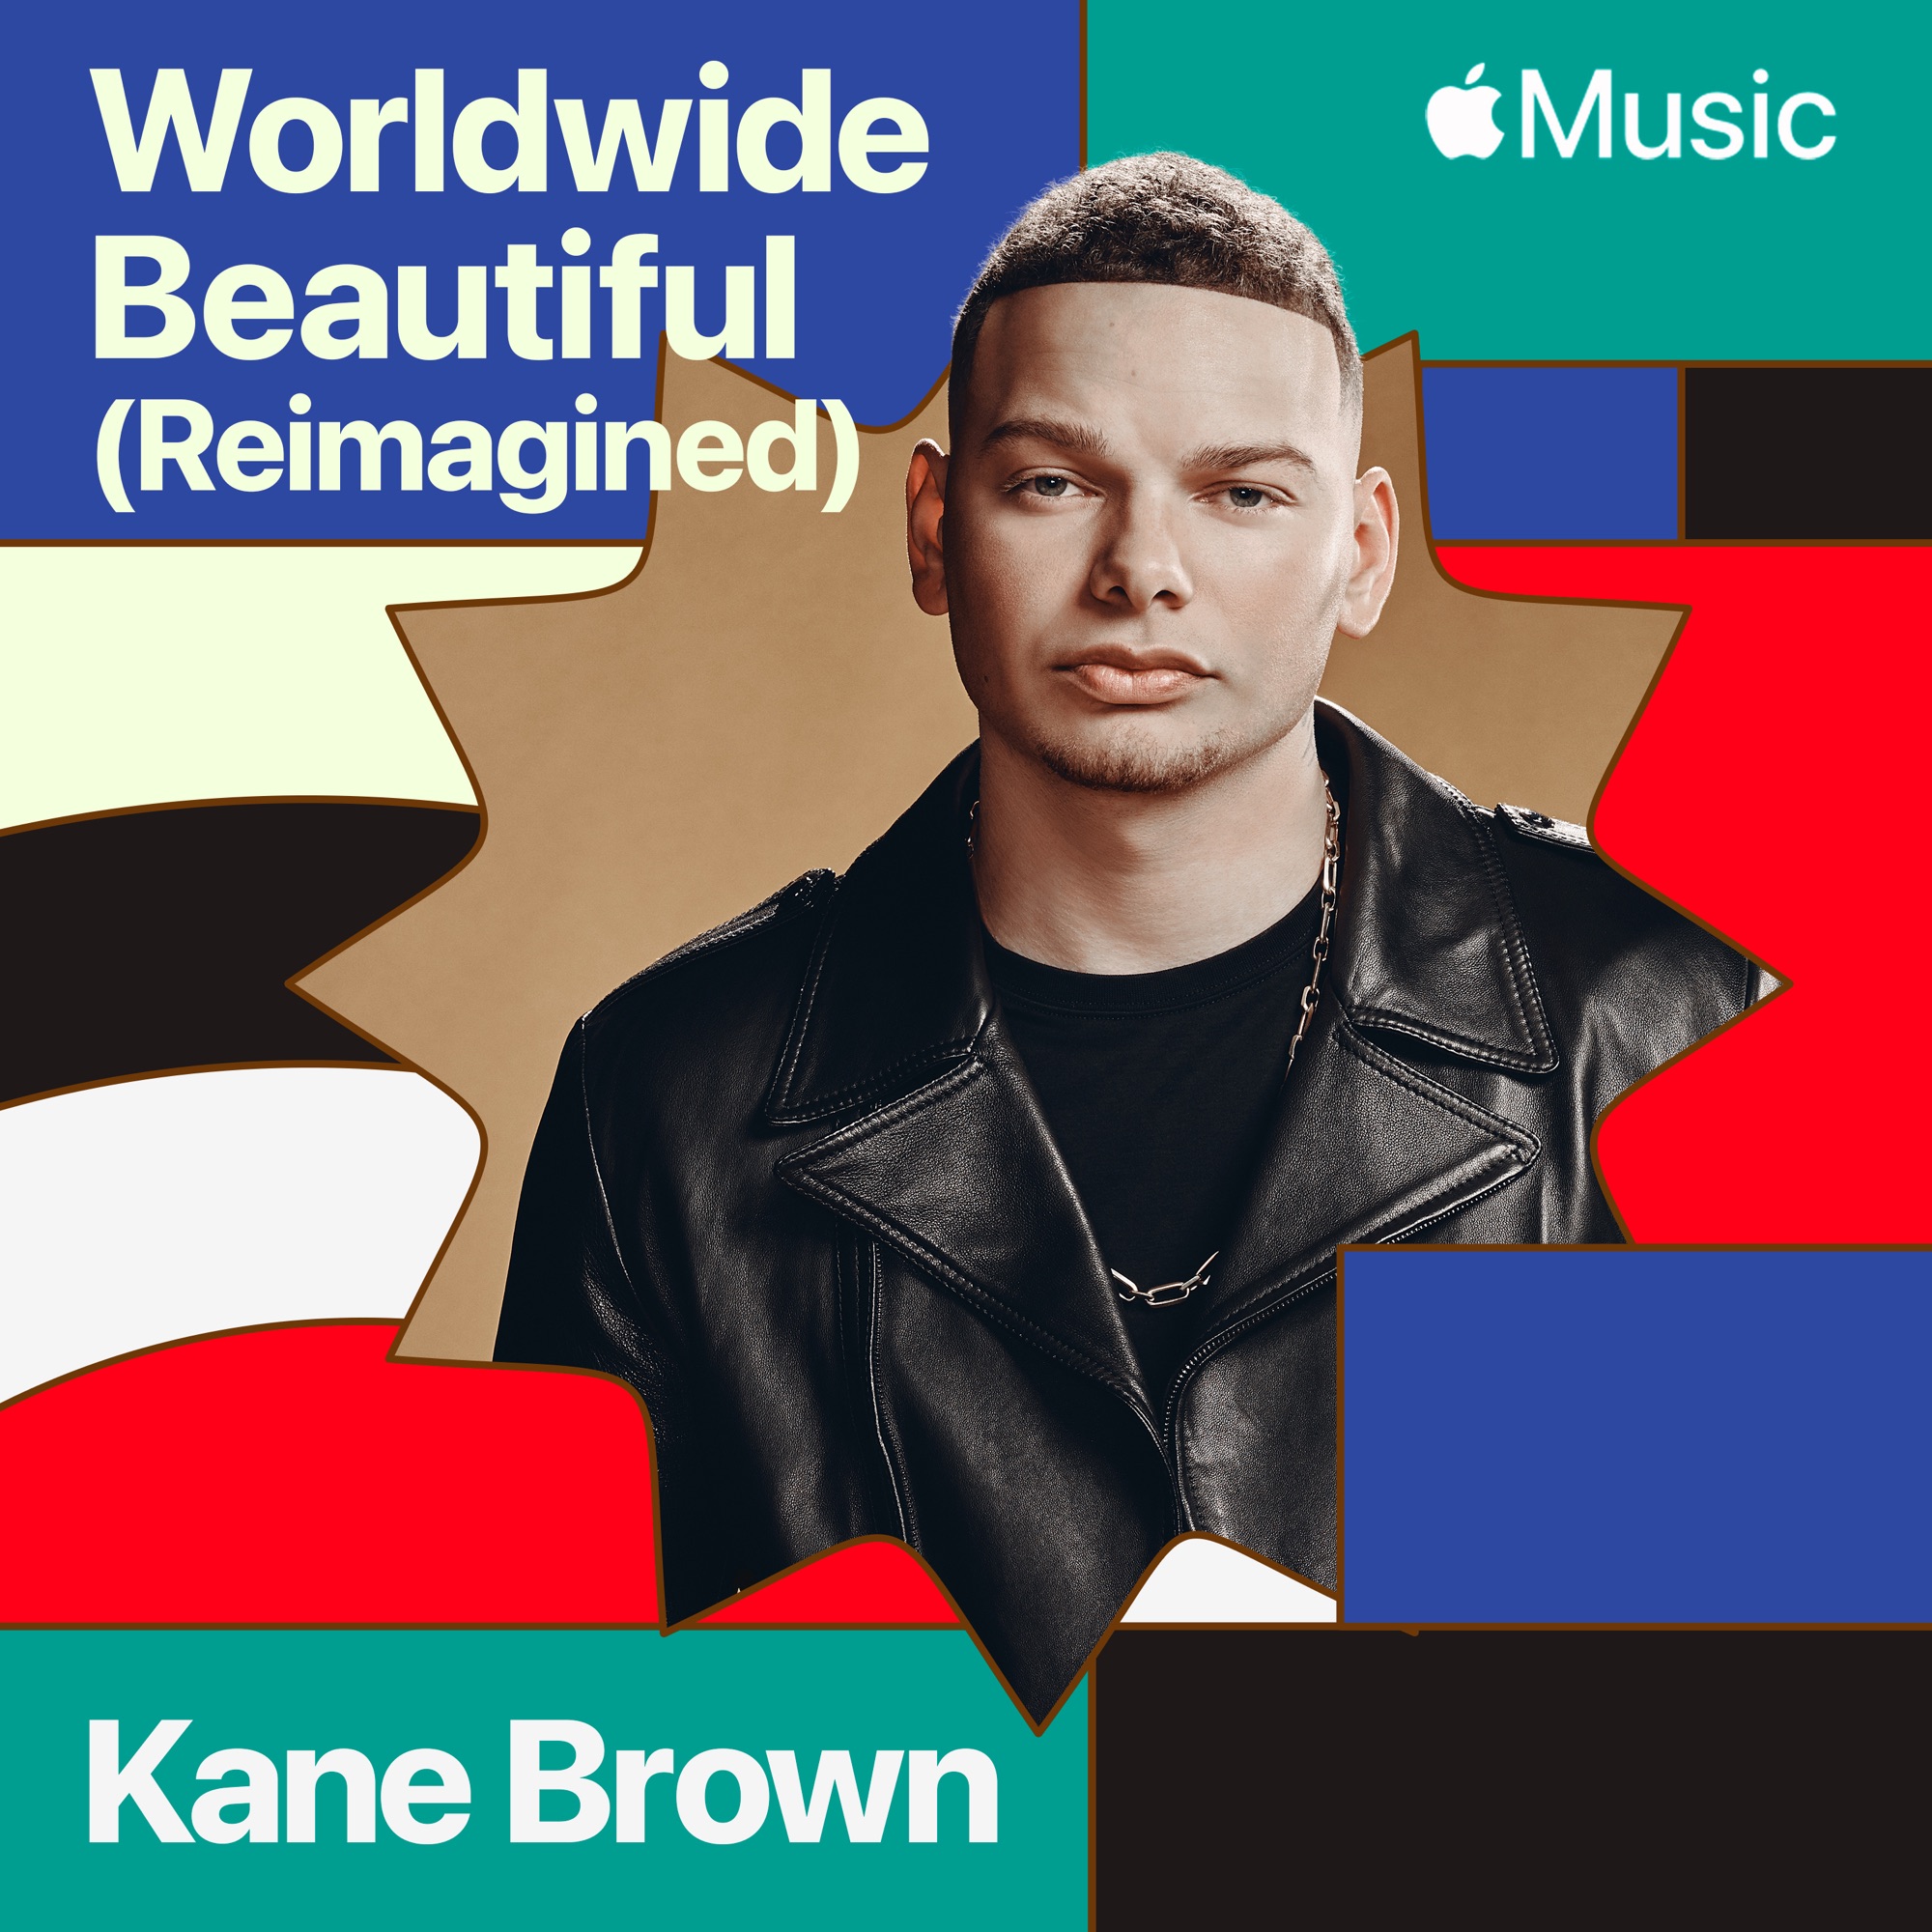 Kane Brown - Worldwide Beautiful - Single